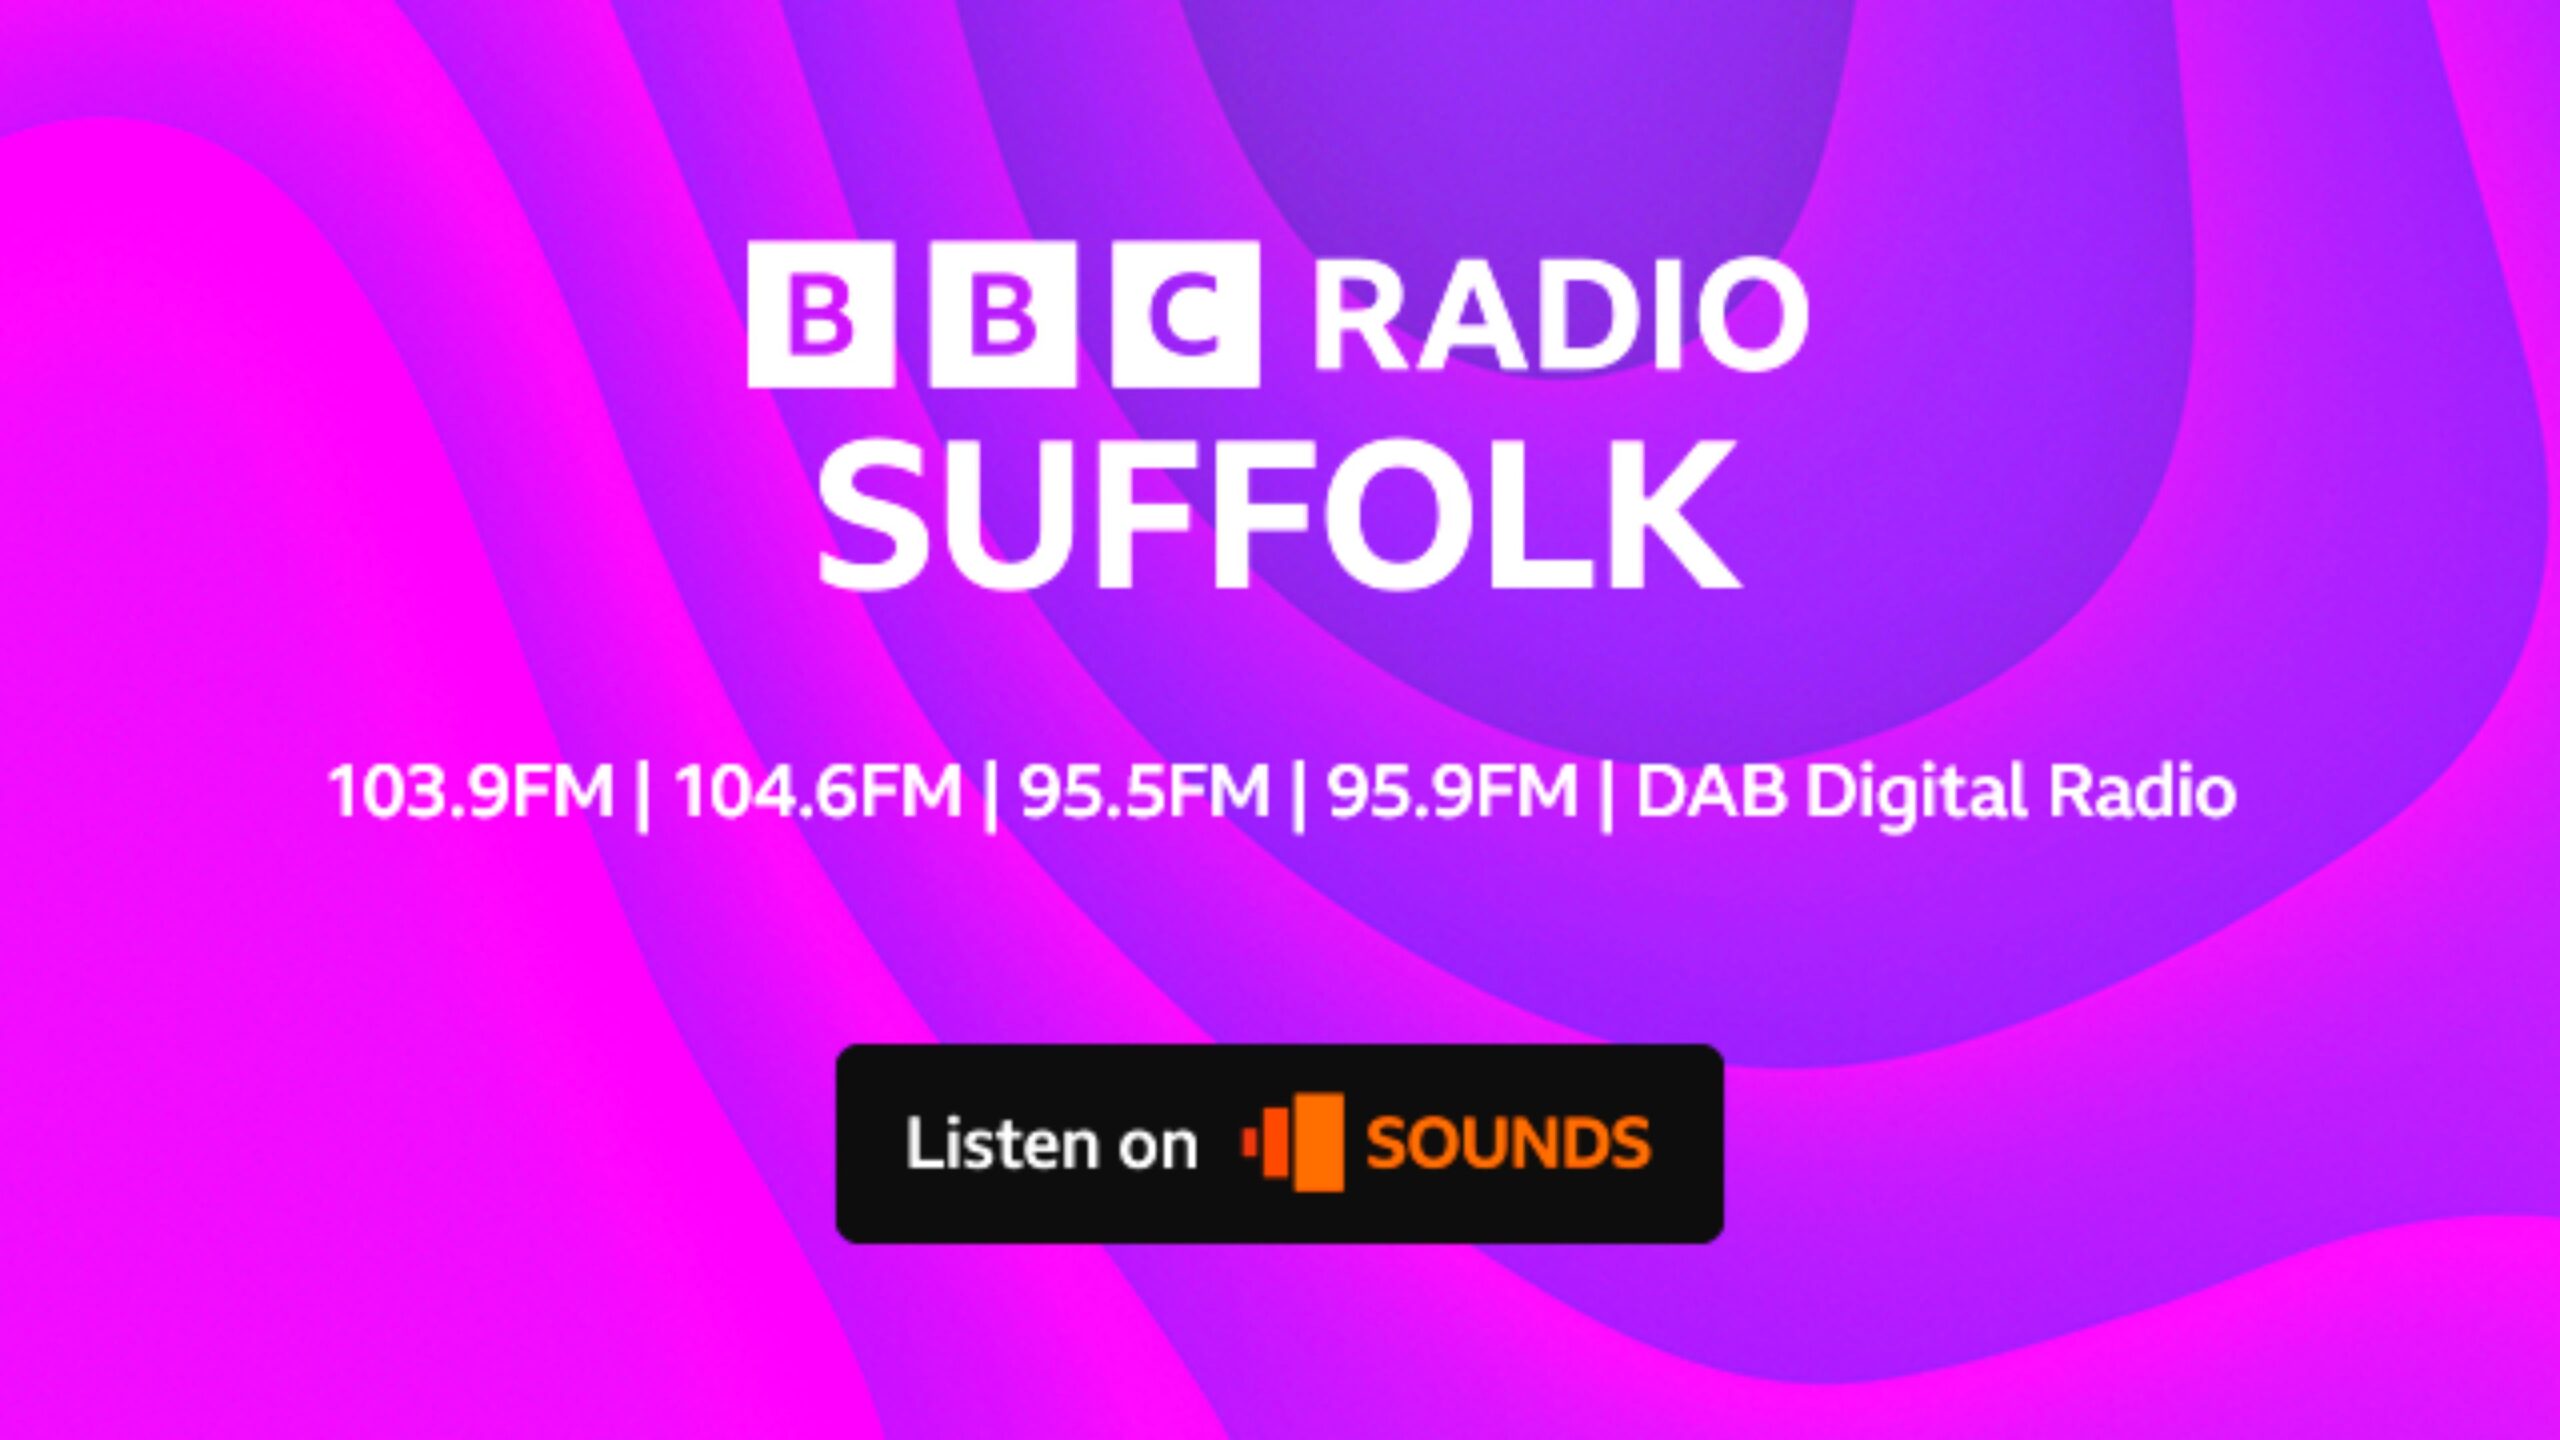 BBC Radio Suffolk | eXplore Bury St Edmunds!